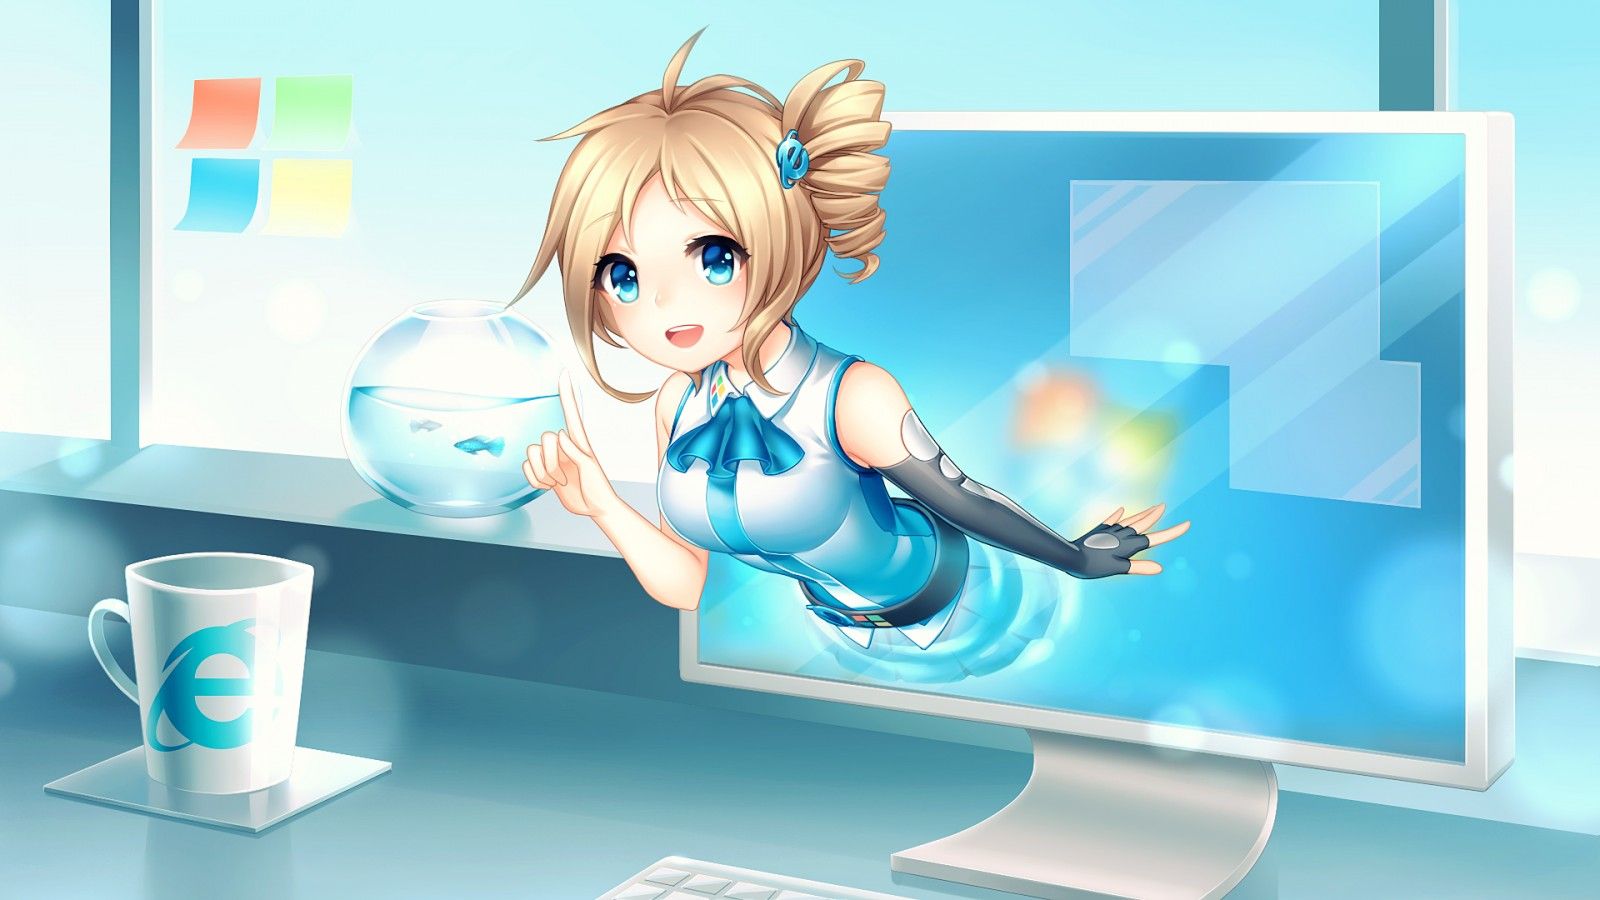 Wallpaper Inori Aizawa, Microsoft, Windows, Internet Explorer, HD, Anime,. Wallpaper for iPhone, Android, Mobile and Desktop